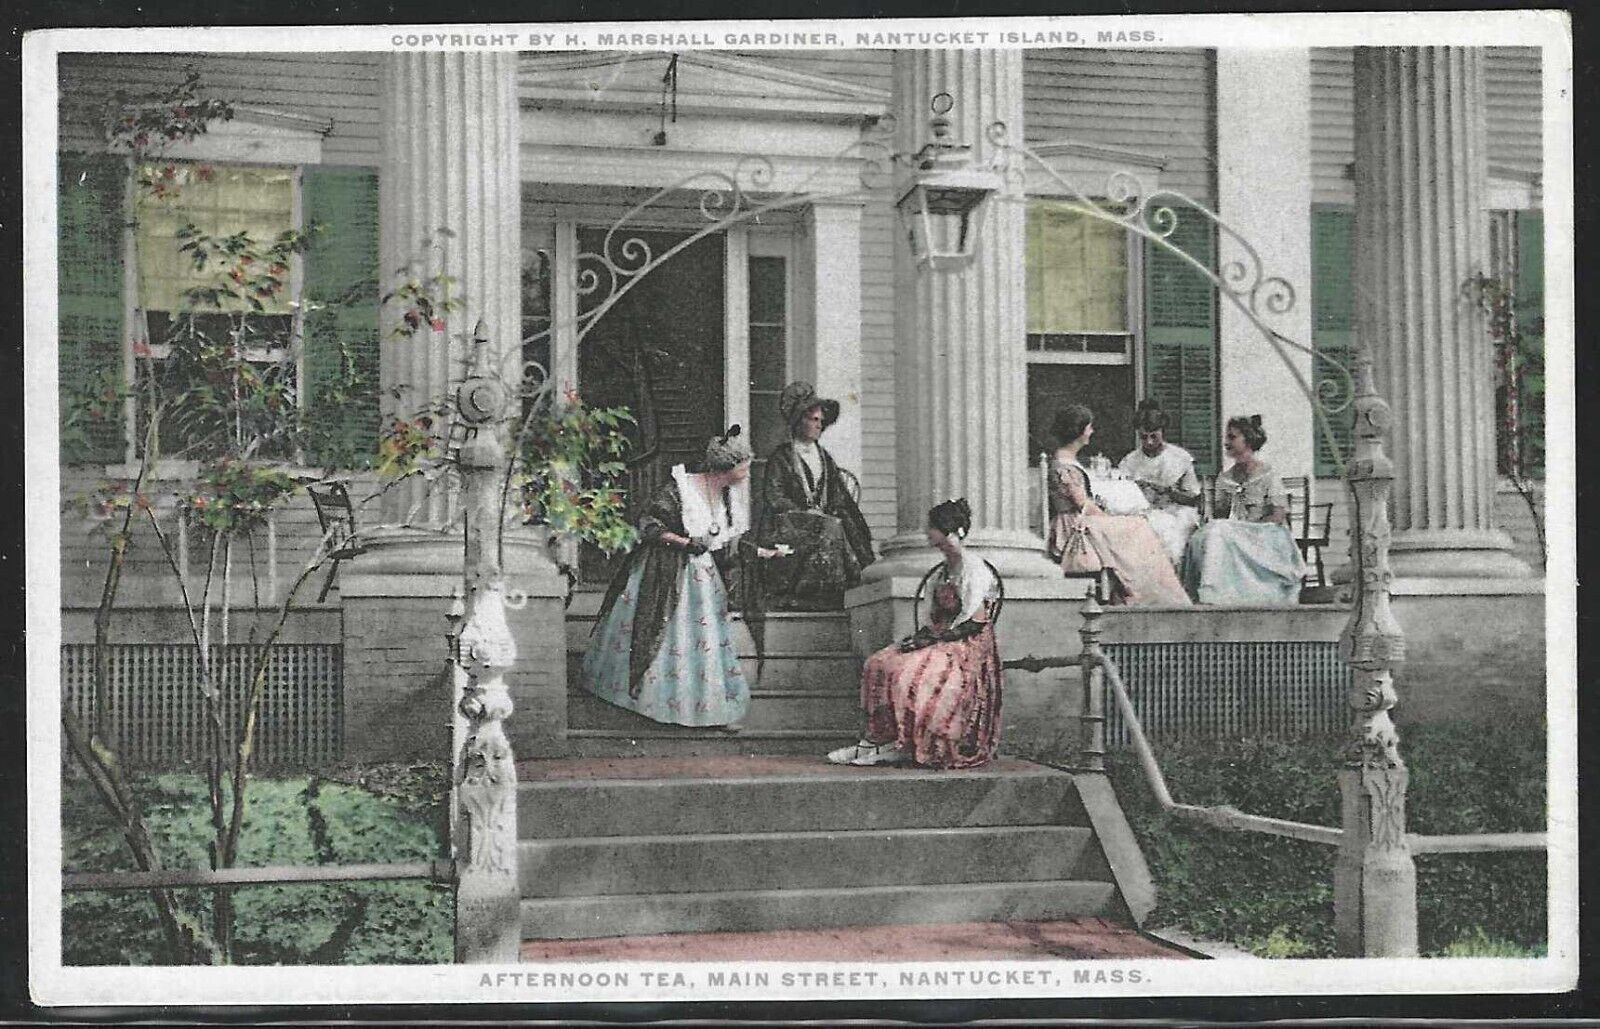 Afternoon Tea, Main St., Nantucket, MA, Early Postcard, Detroit Publishing Co.